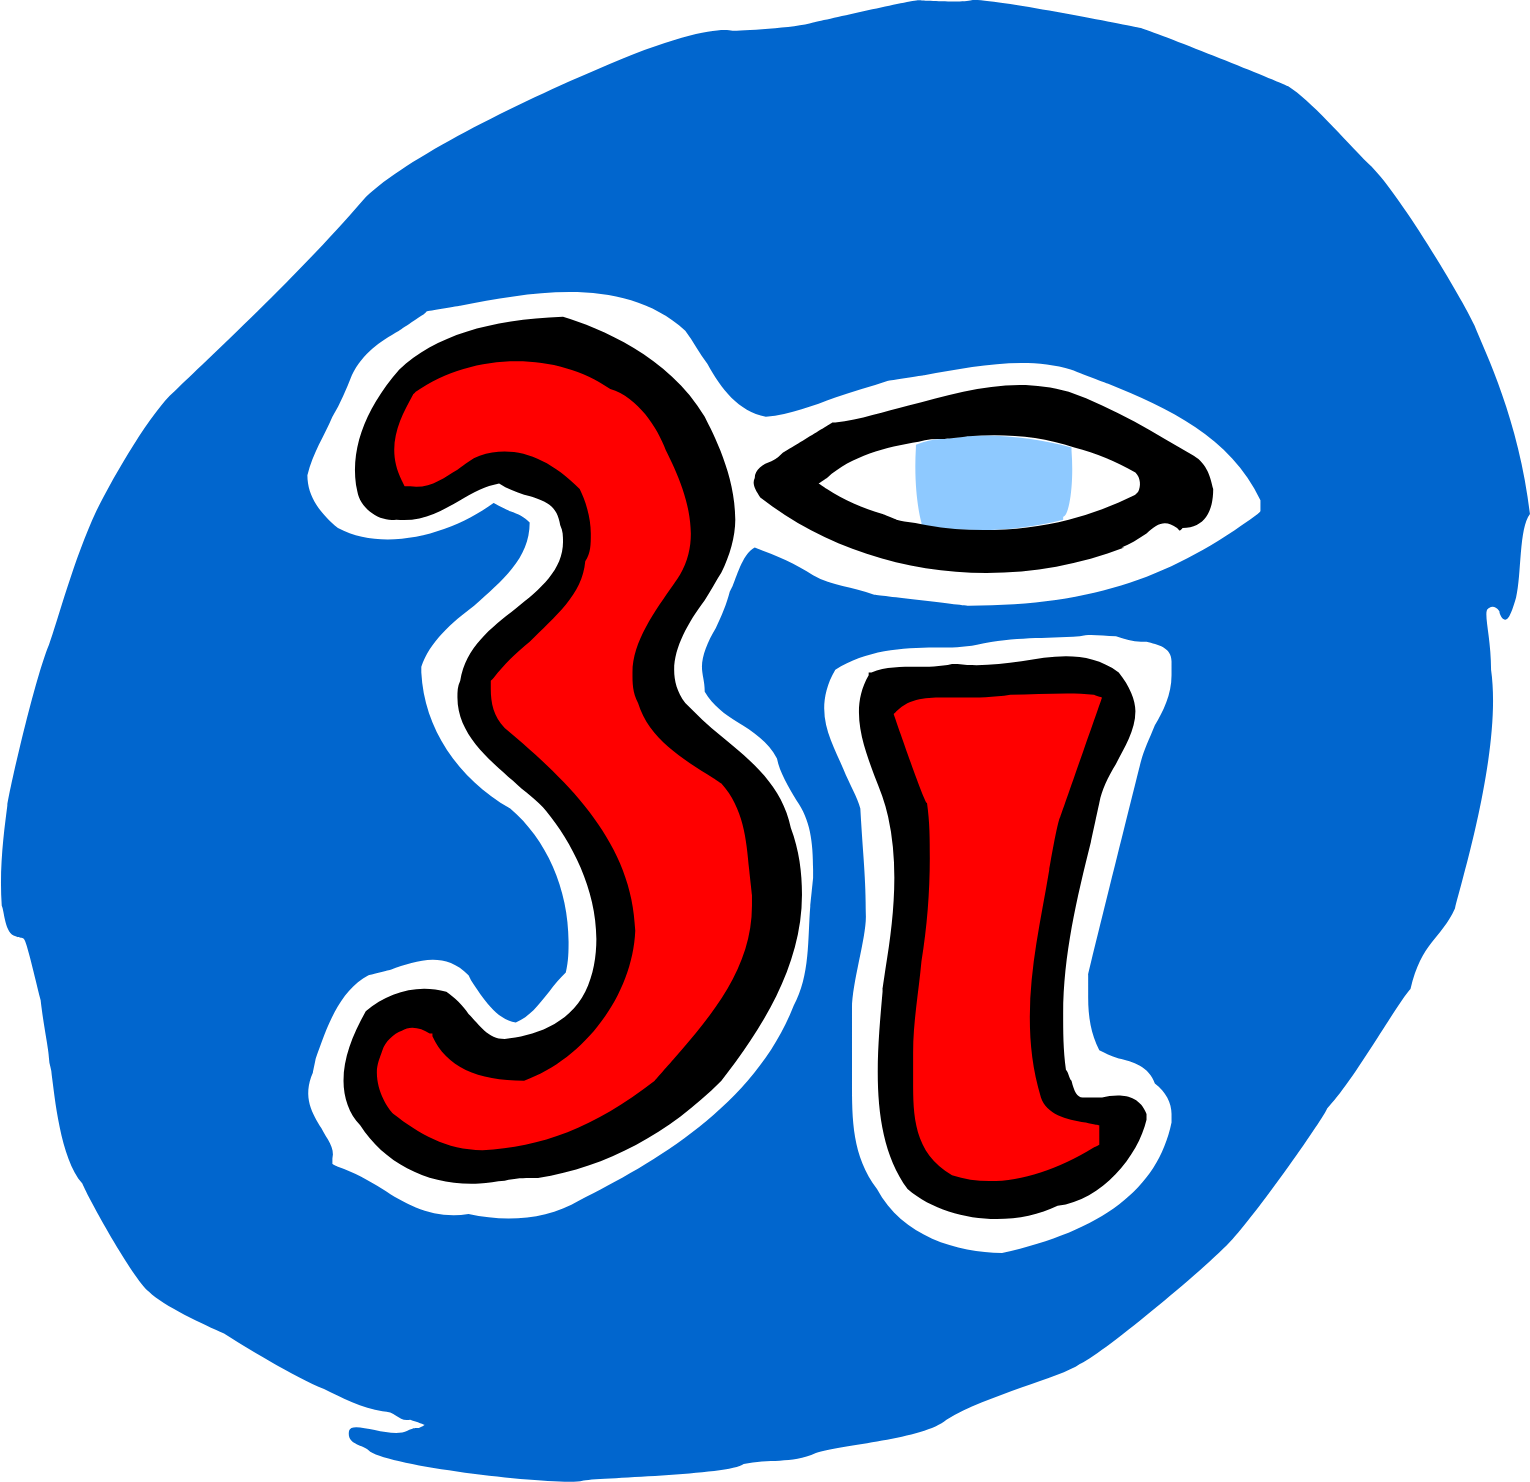 3i Group logo (transparent PNG)